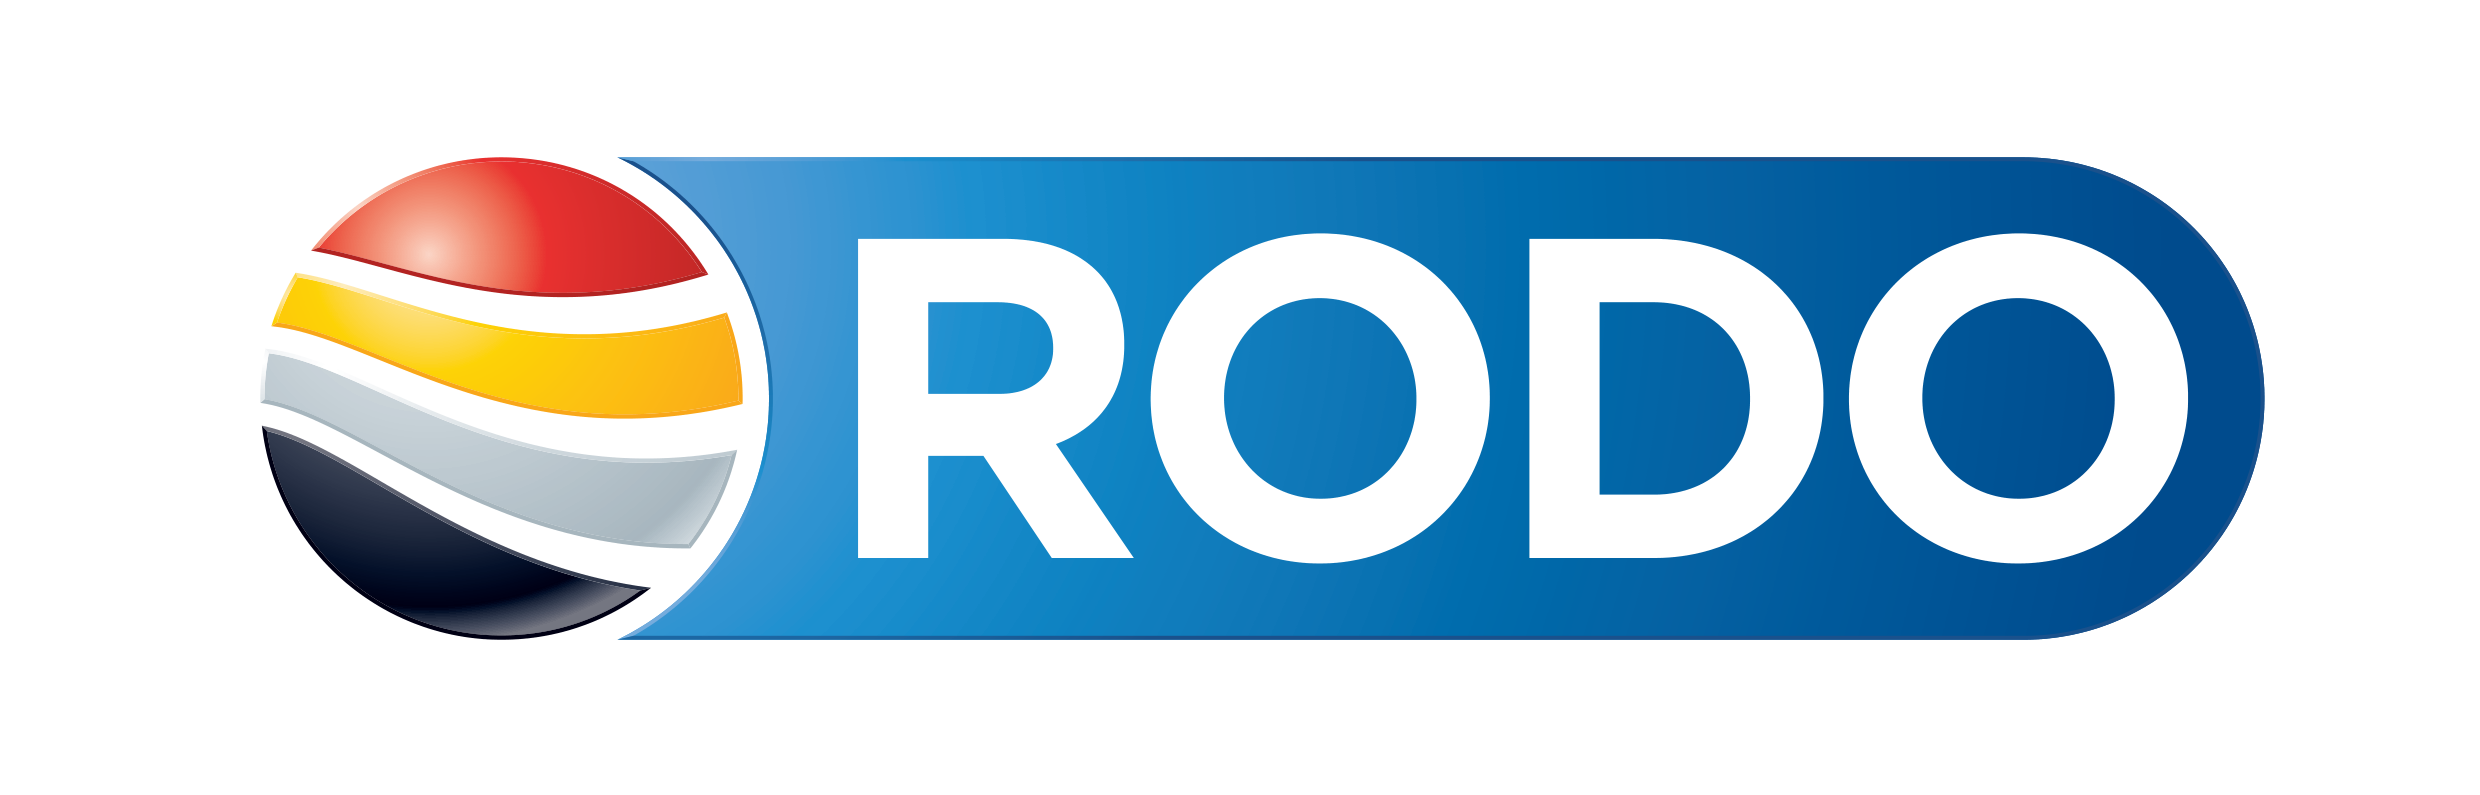 rodo-logo-1679587713.png